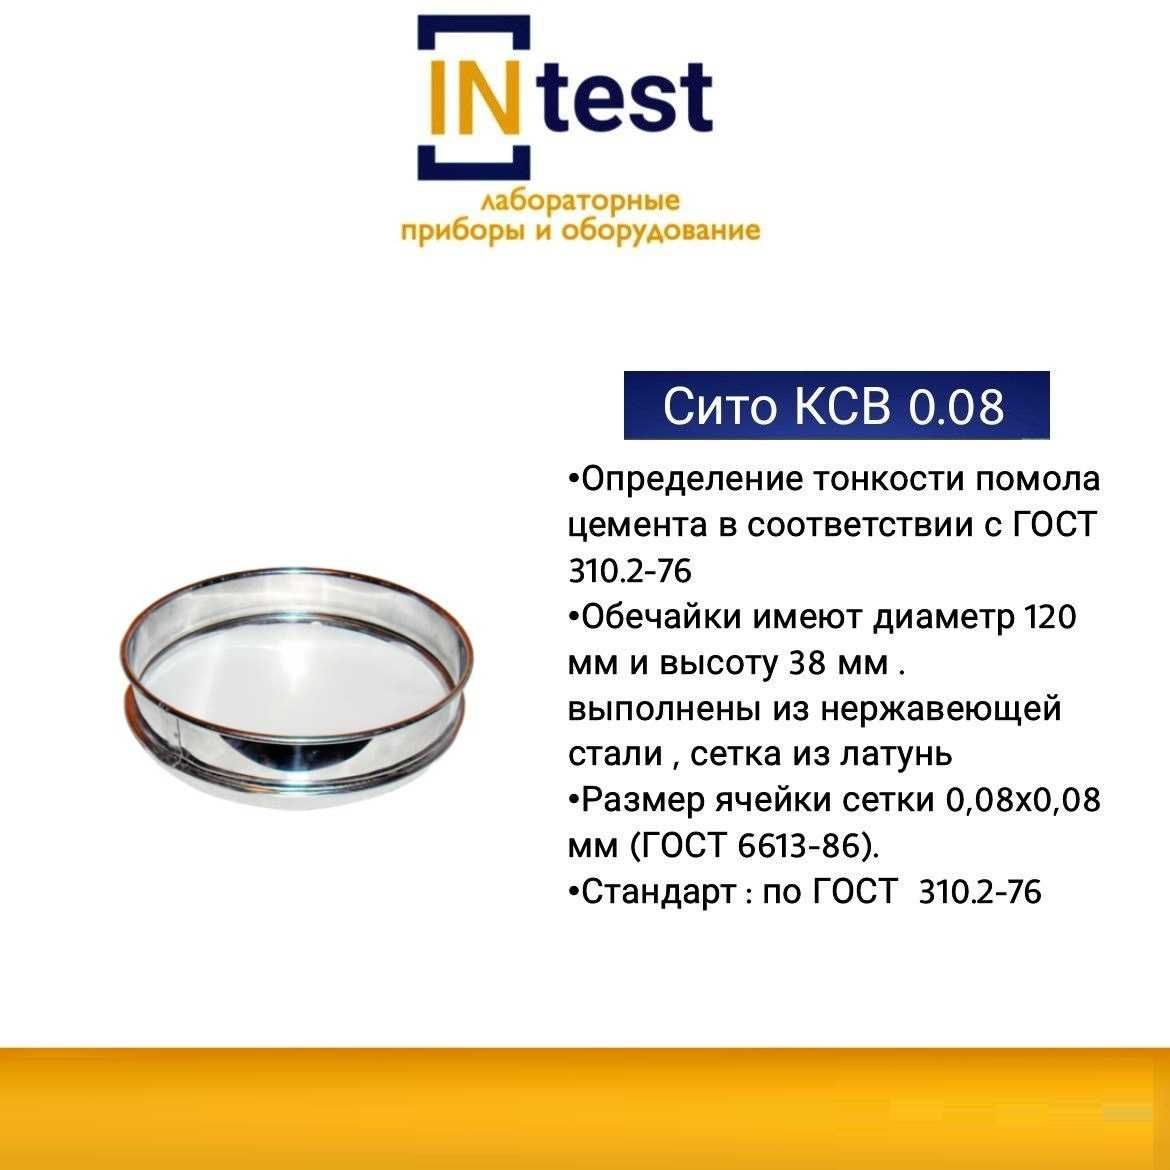 Сито КСВ 0.08 - Определение тонкости помола цемента